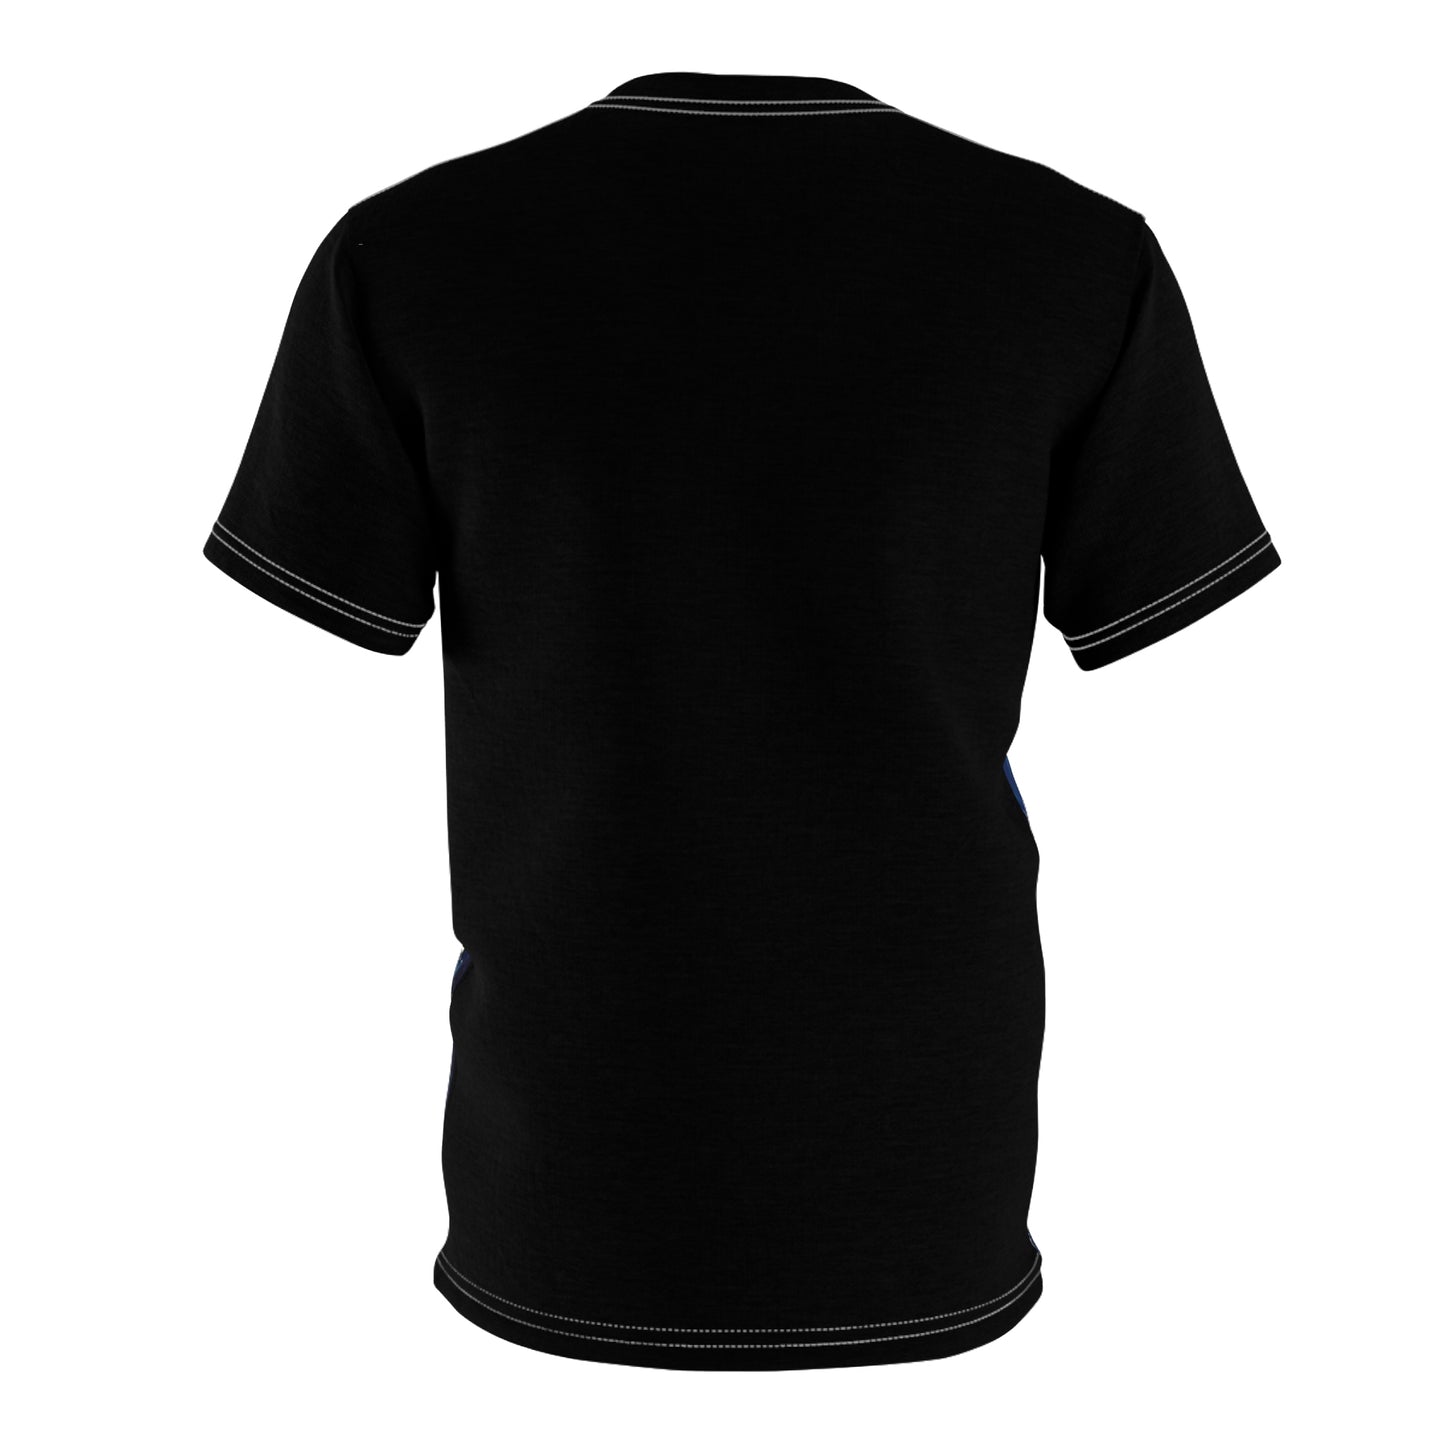 Resolutions - Unisex All-Over Print Cut & Sew T-Shirt